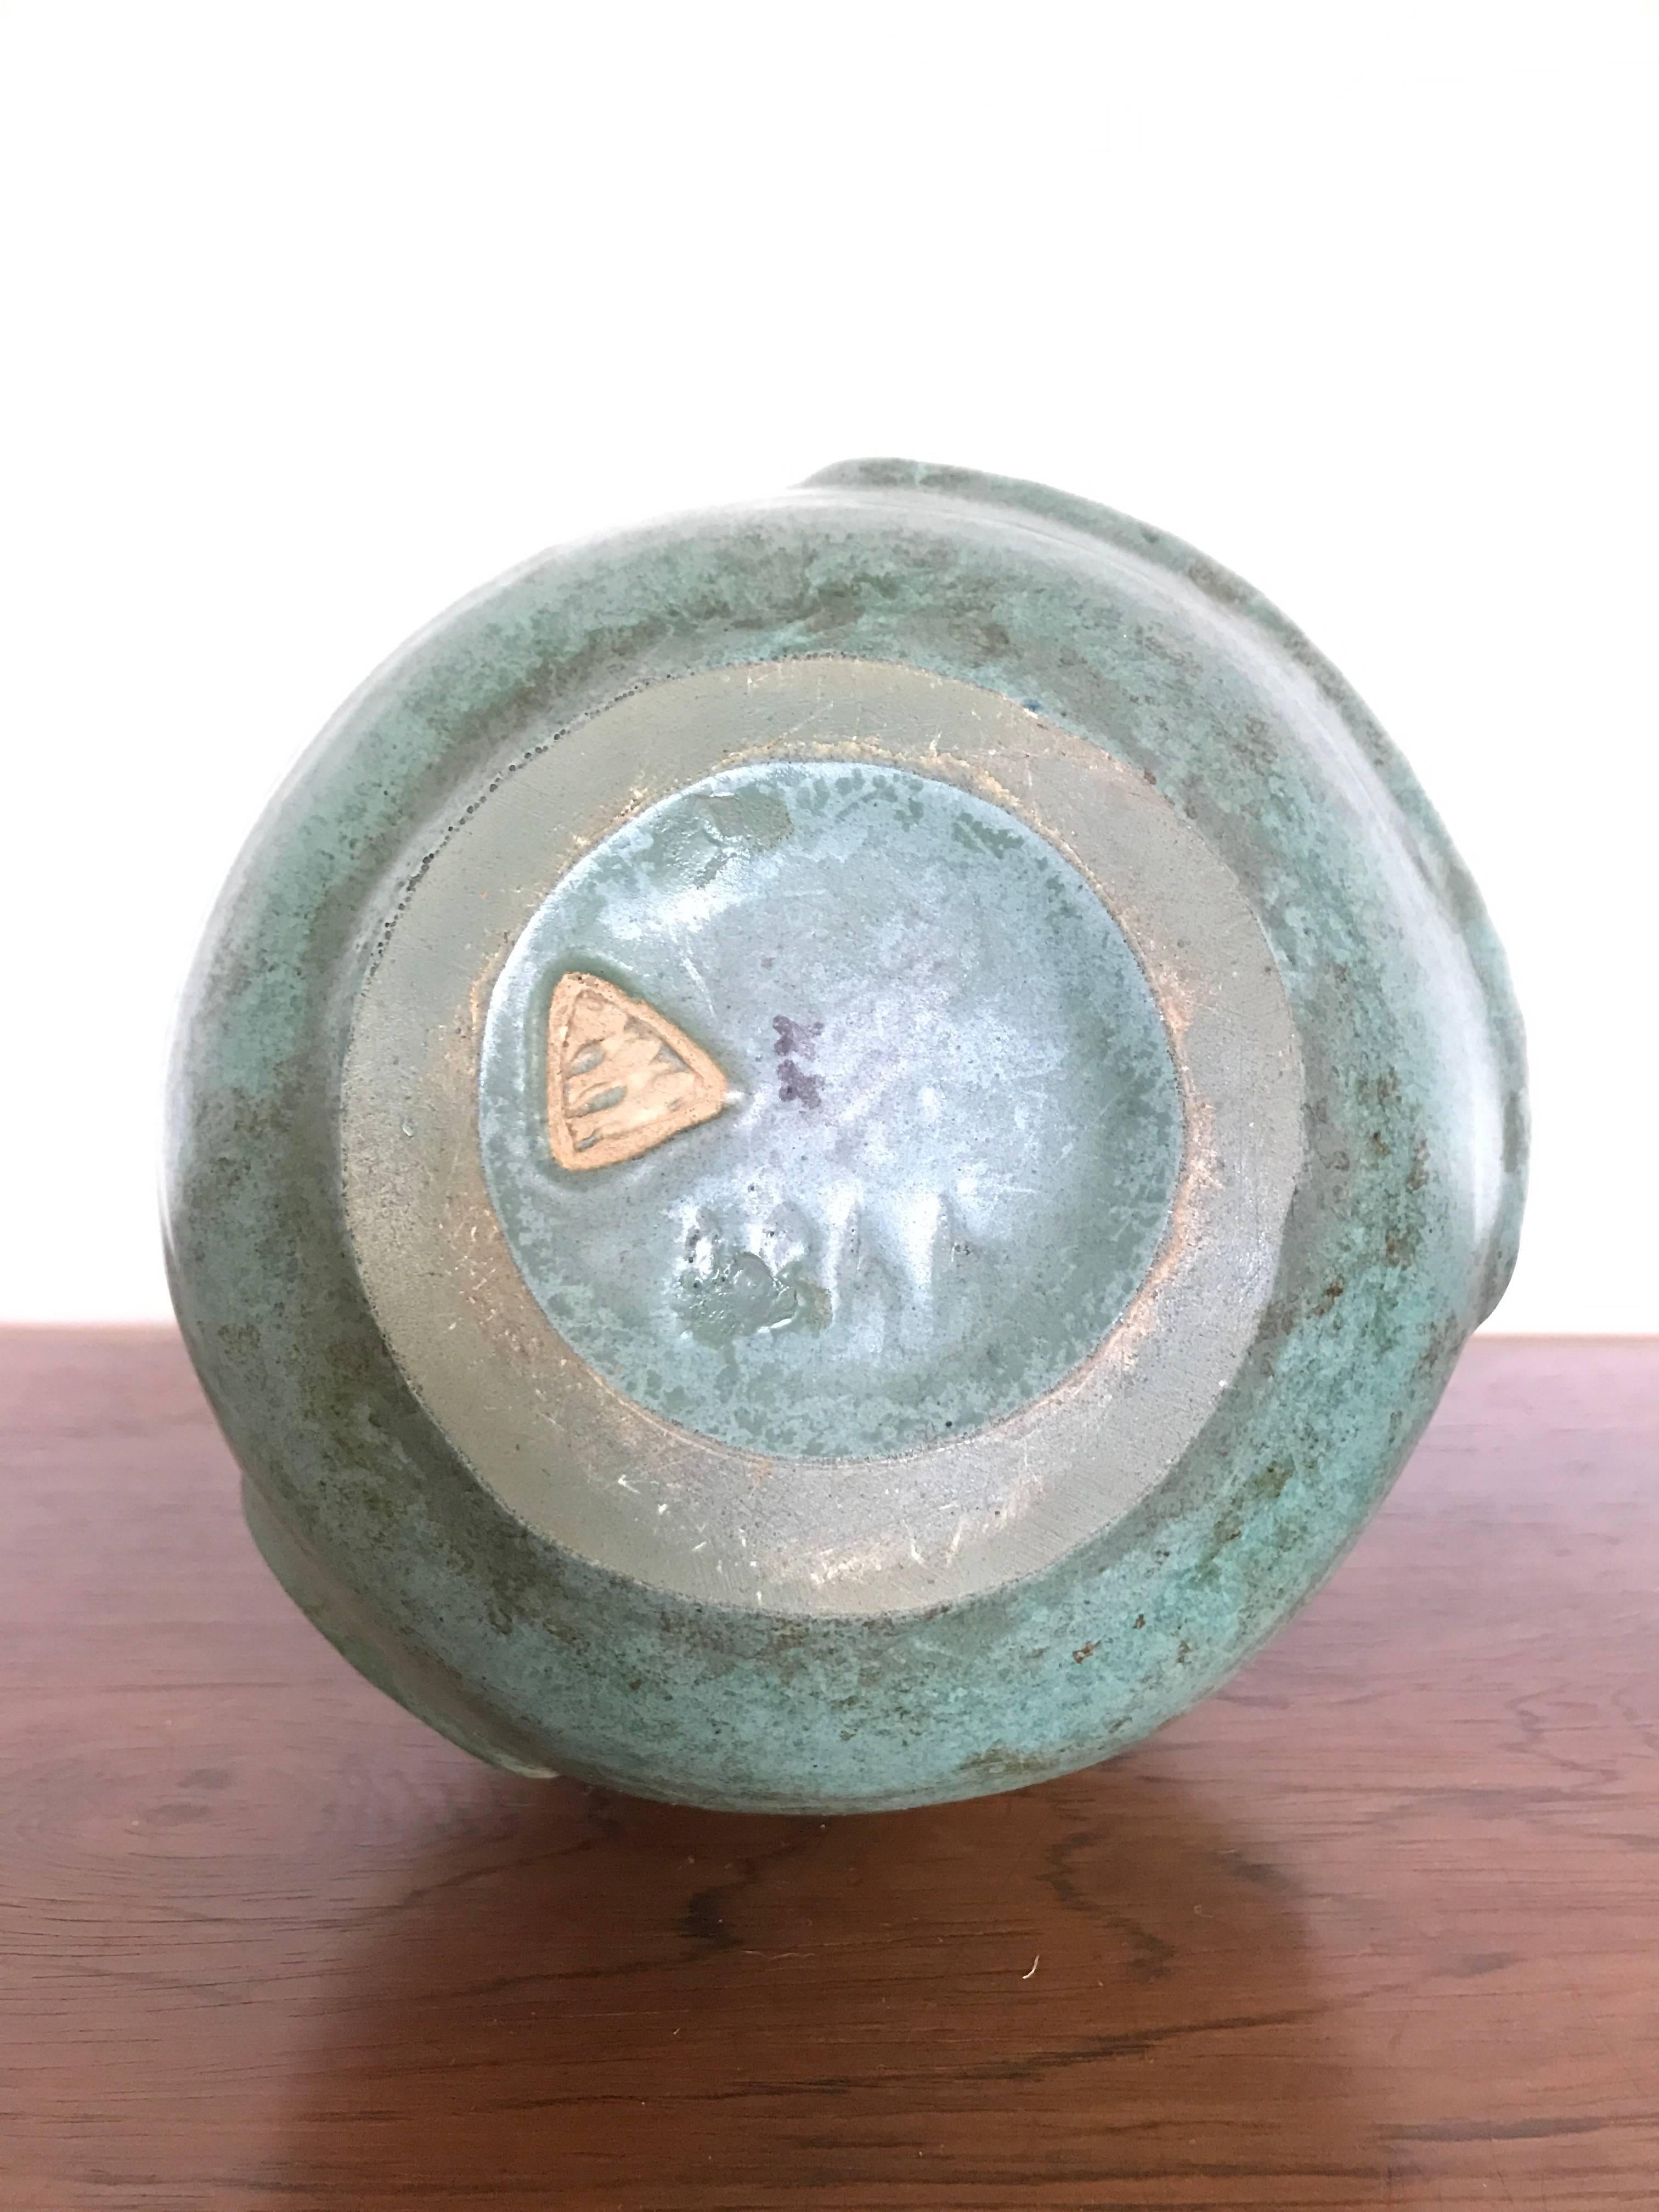 Michael Andersen Stoneware Vase with Green Glaze, 1930s from Denmark 2